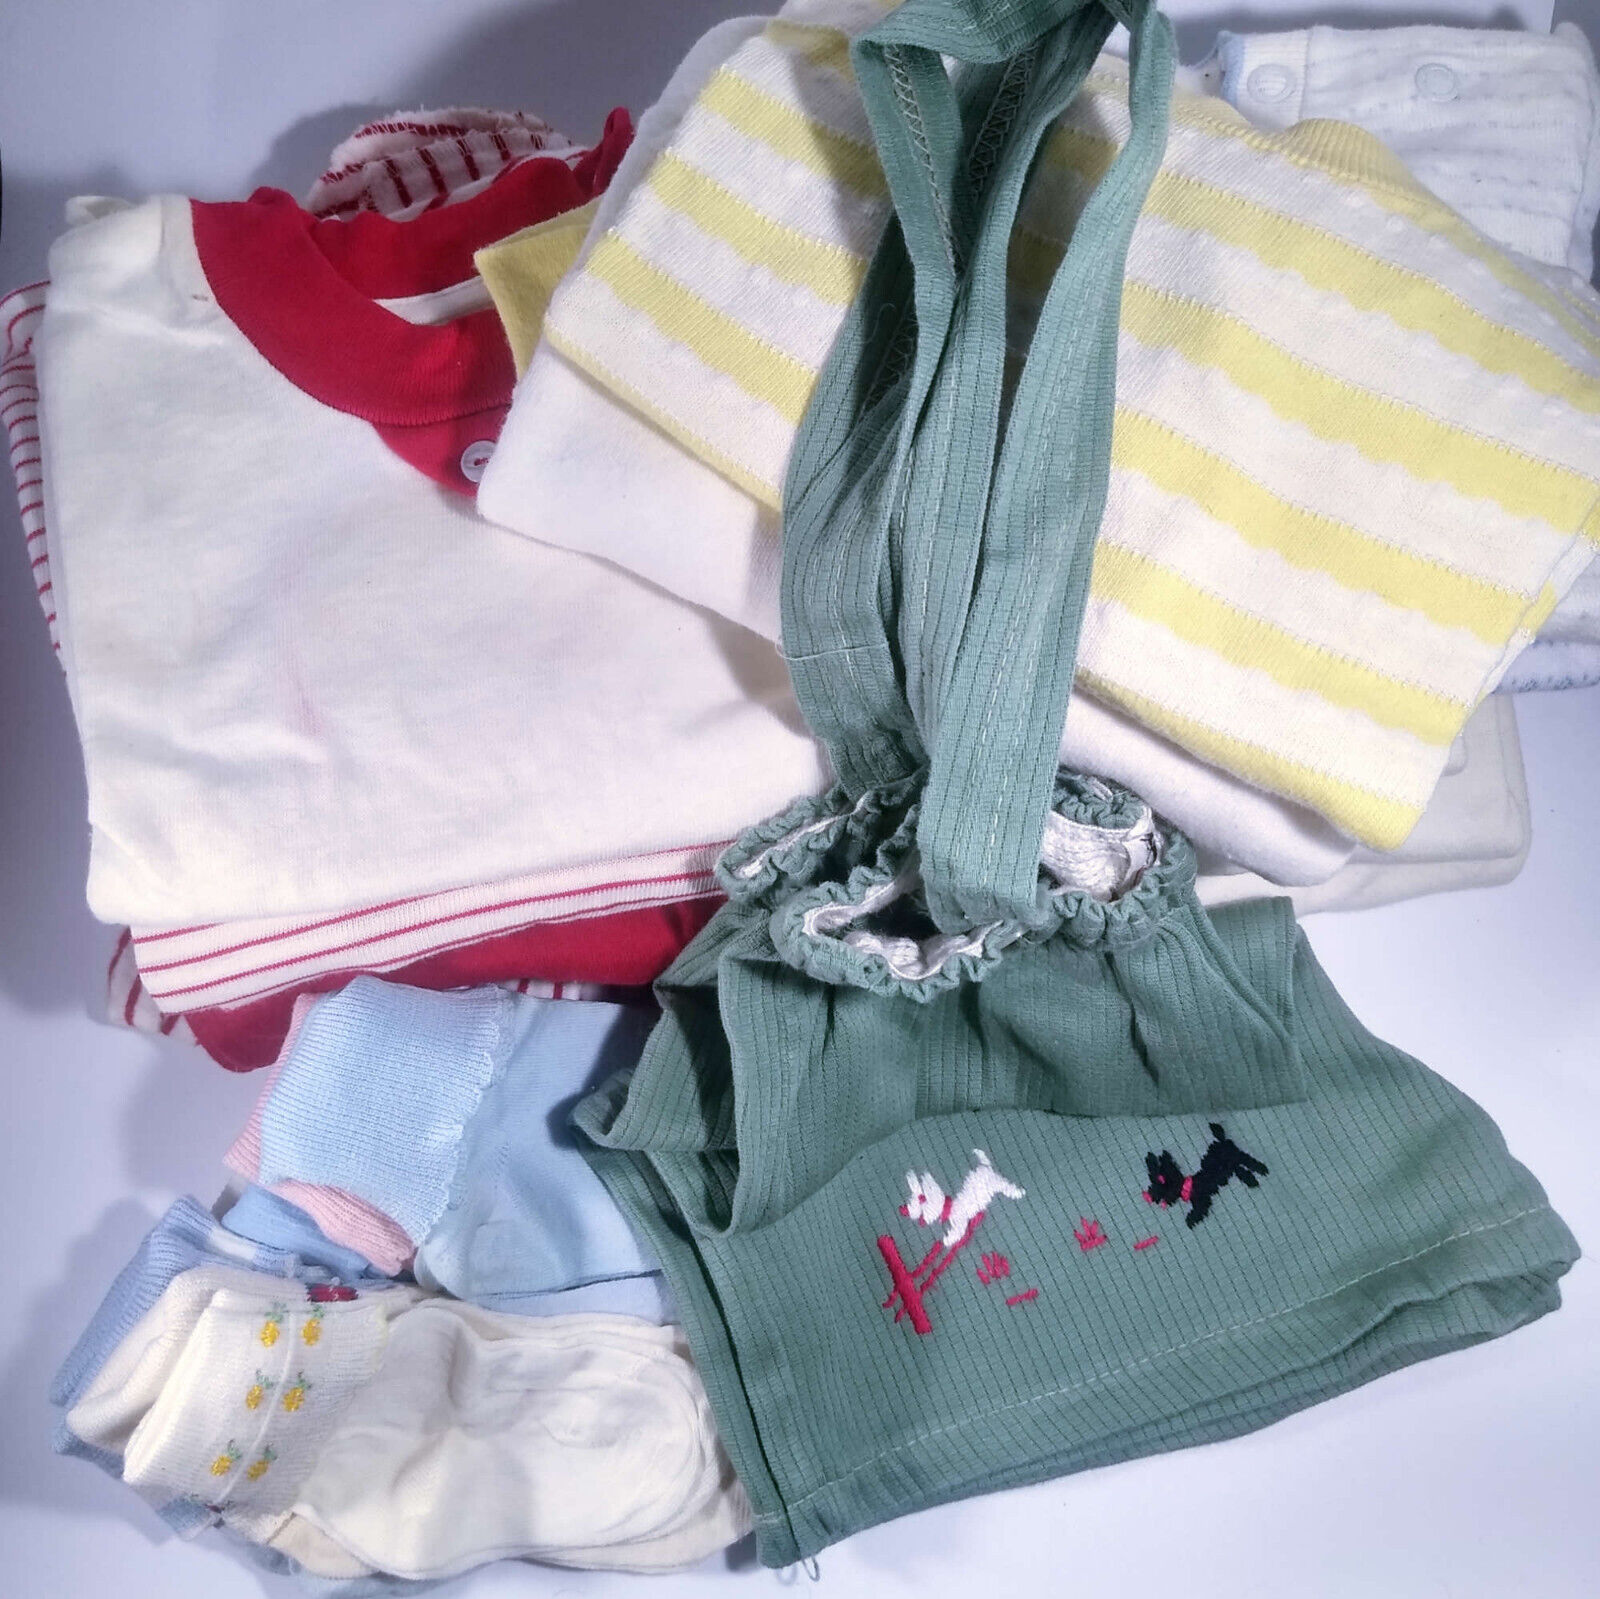 Original Vintage Child Clothing Large Lot Age 1-3  Shirts Shorts Socks Pj Set